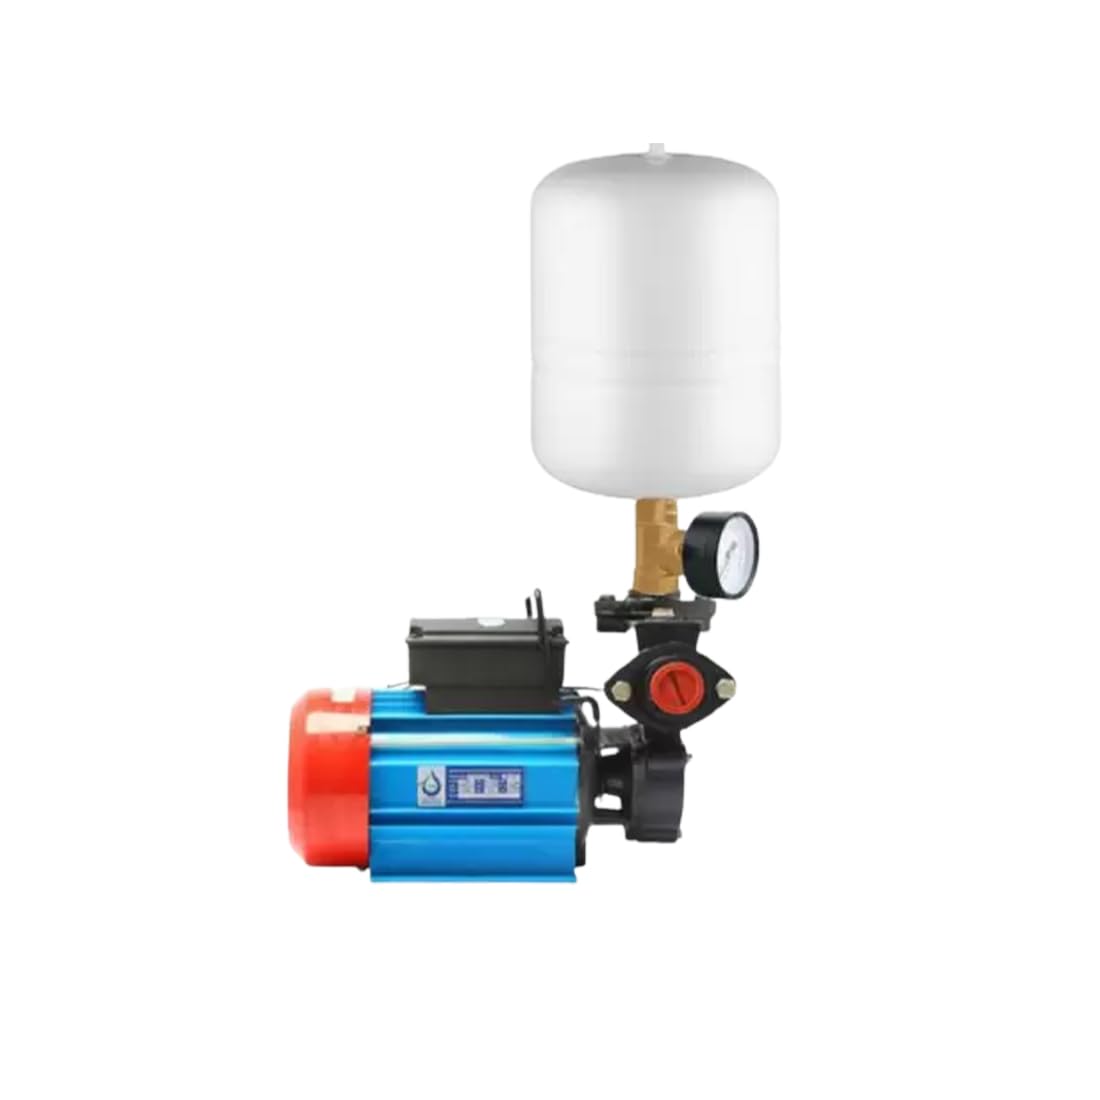 Sameer I-Flo Smart Pressure Booster Pump 1.5Hp, For 3-4 Bathrooms, 1 Year Warranty